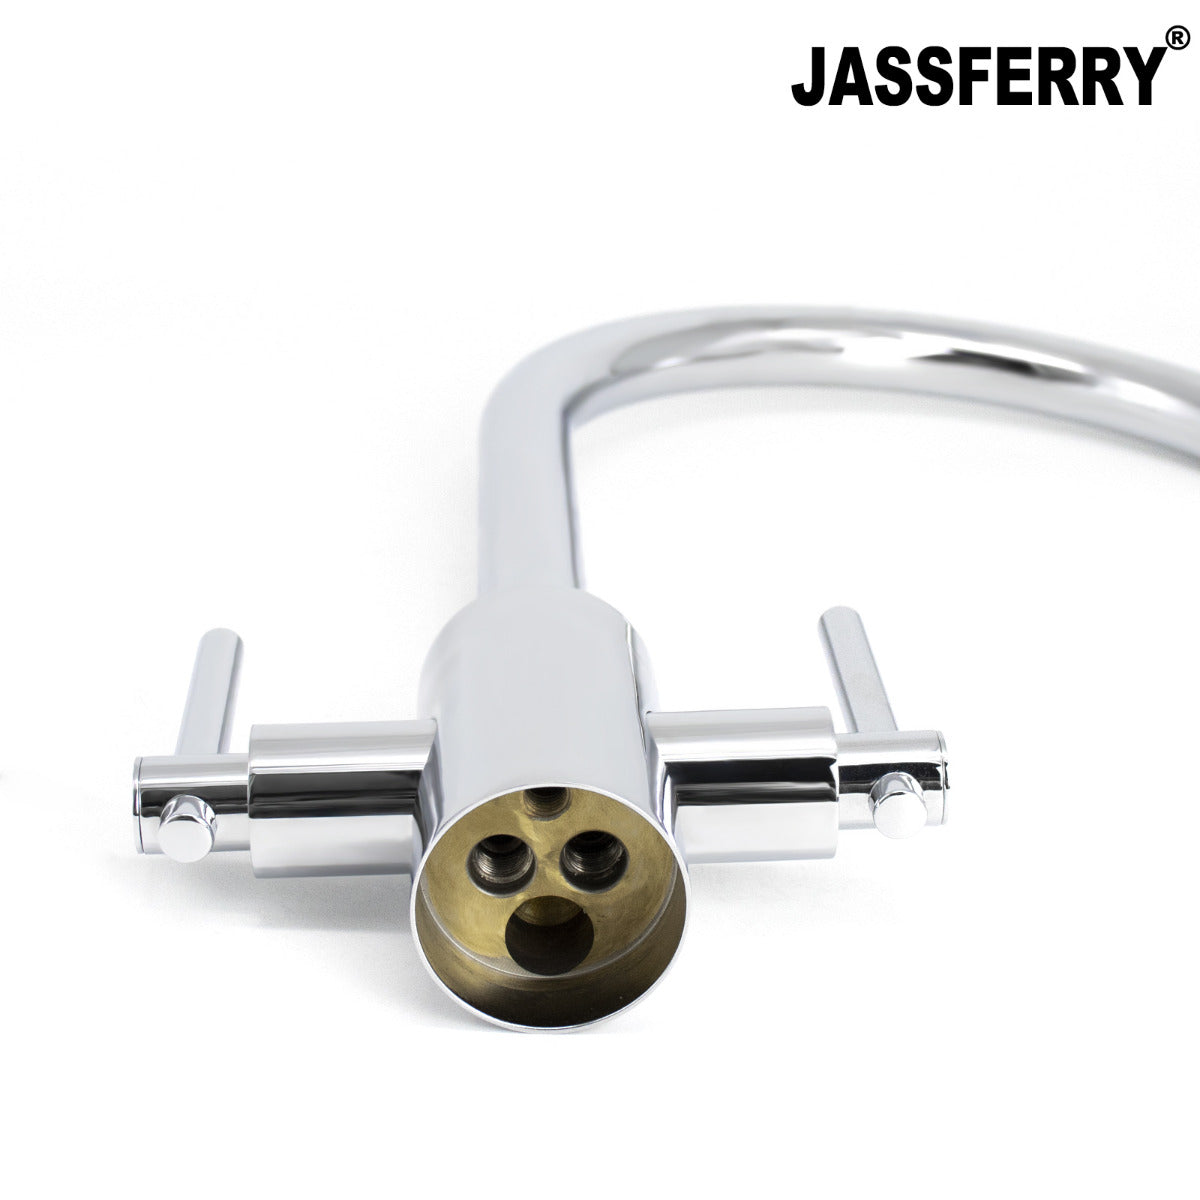 JassferryJASSFERRY New Brass Kitchen Mixer Taps Double Lever Sink Swivel Spout ChromeKitchen taps